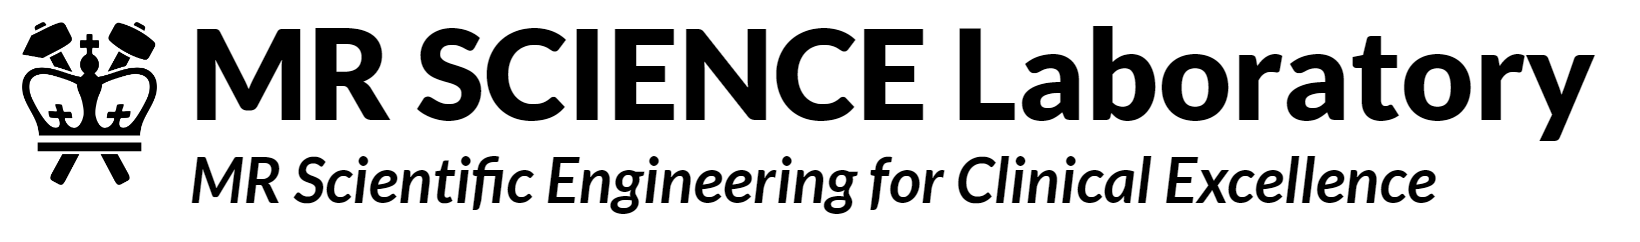 MR SCIENCE Laboratory logo